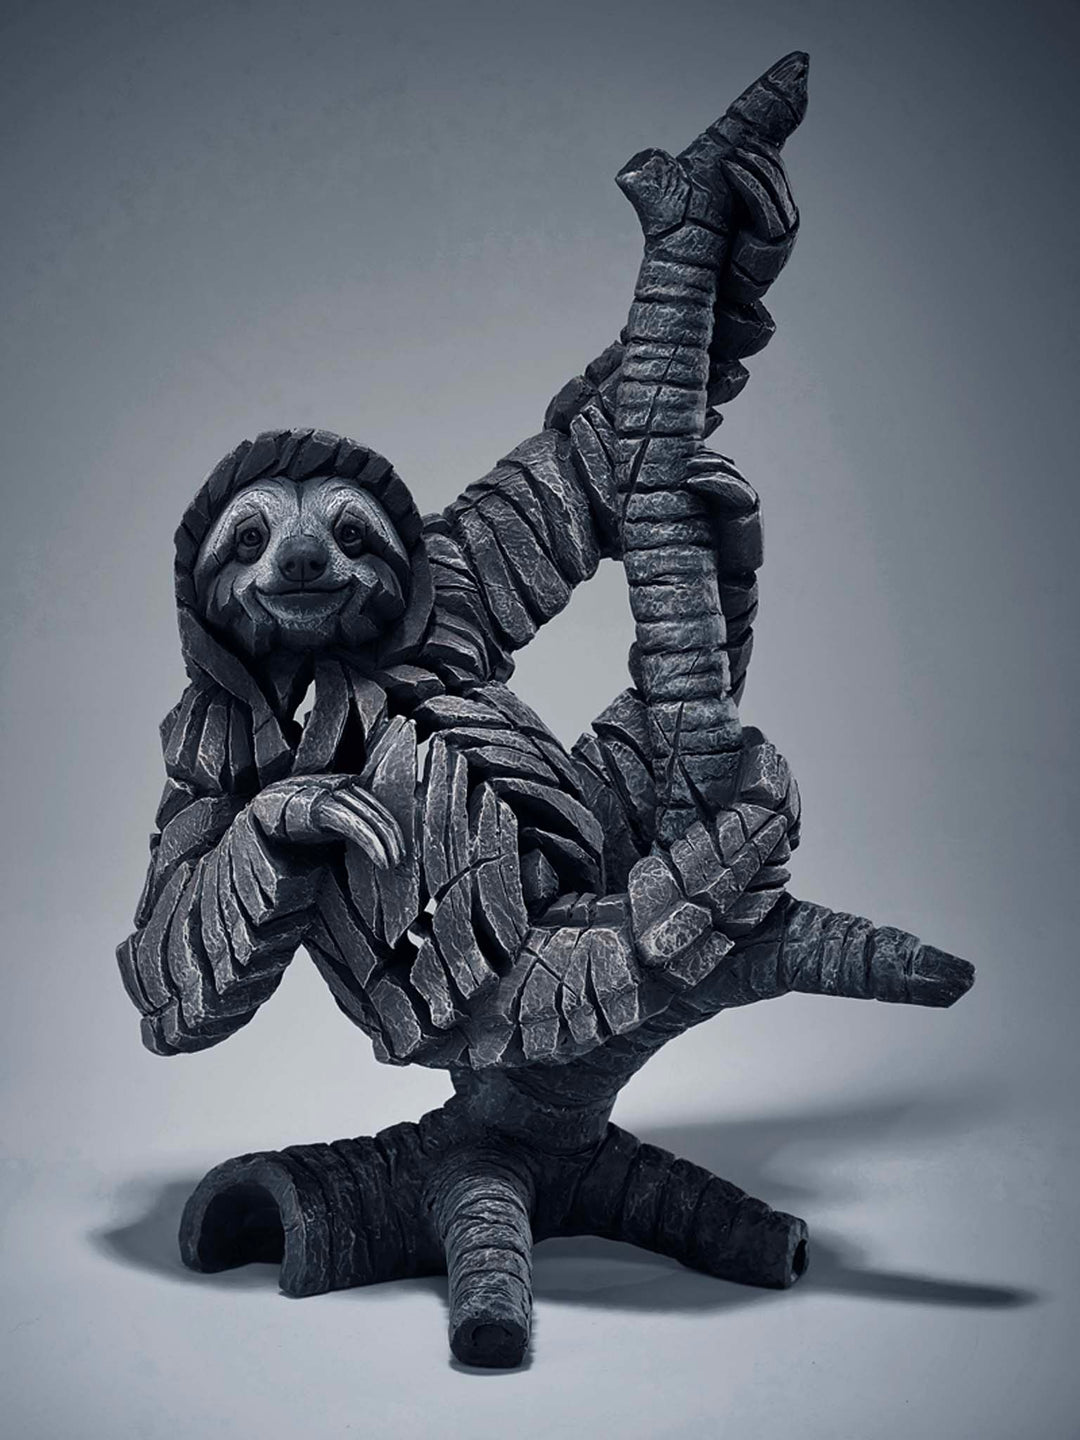 Sloth figurine, edge sculpture, art gallery figuring, 